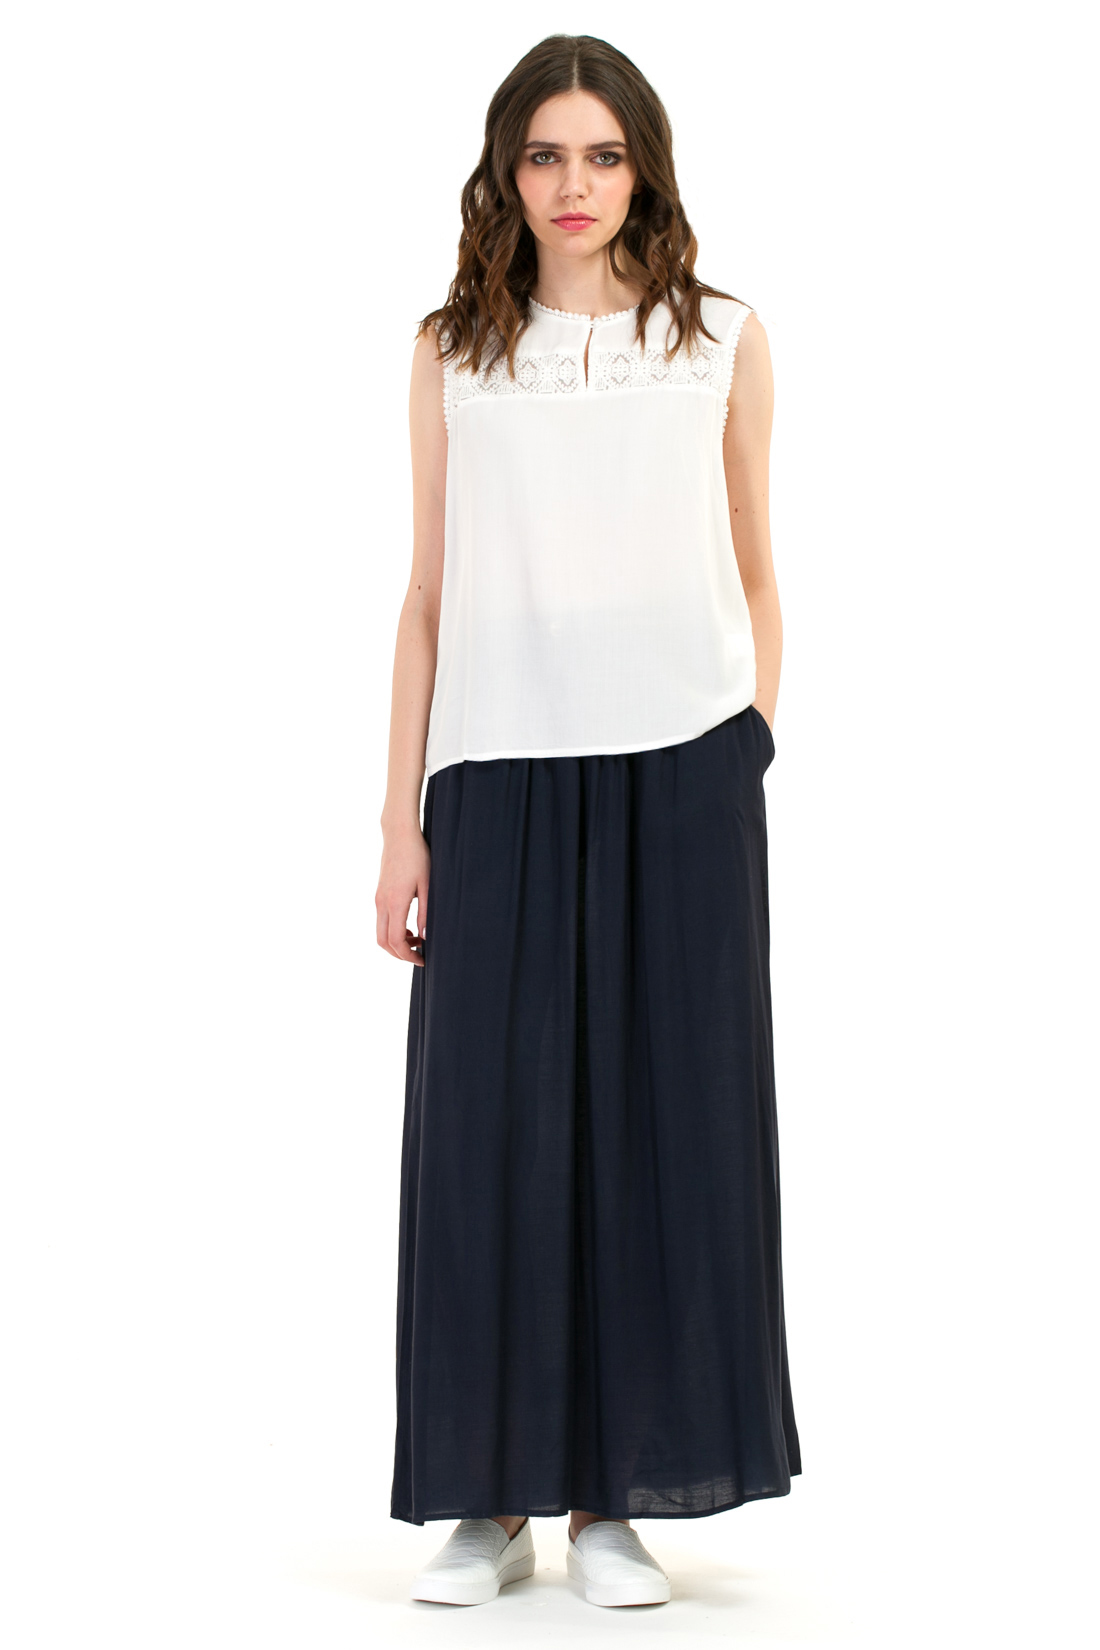 Длинная юбка с ремешком (арт. baon B477041), размер 3XL, цвет синий Длинная юбка с ремешком (арт. baon B477041) - фото 1